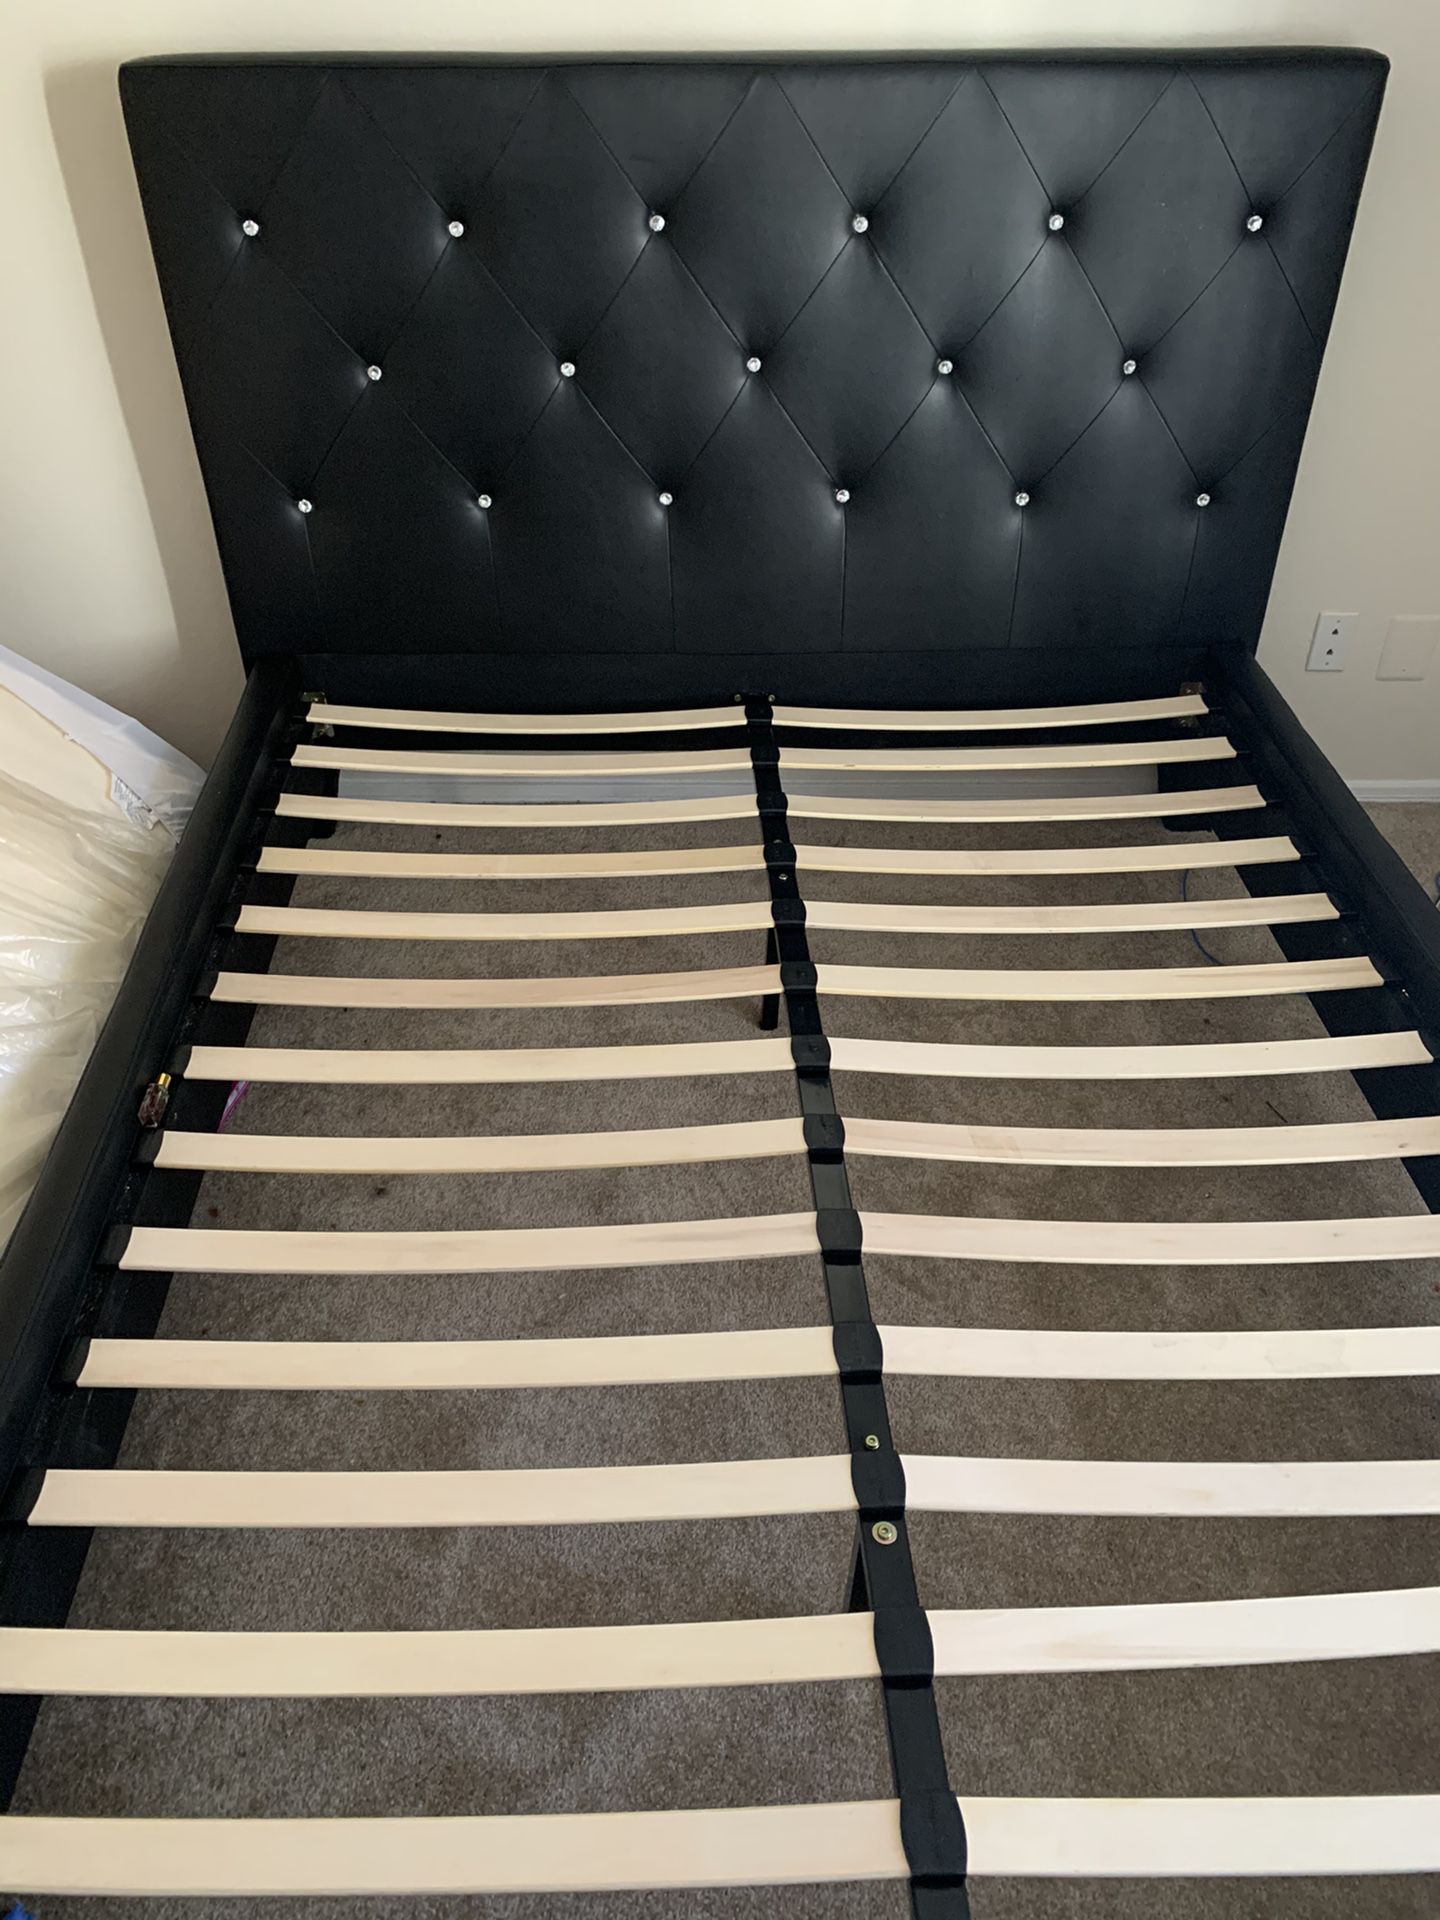 Queen Black studded bed frame